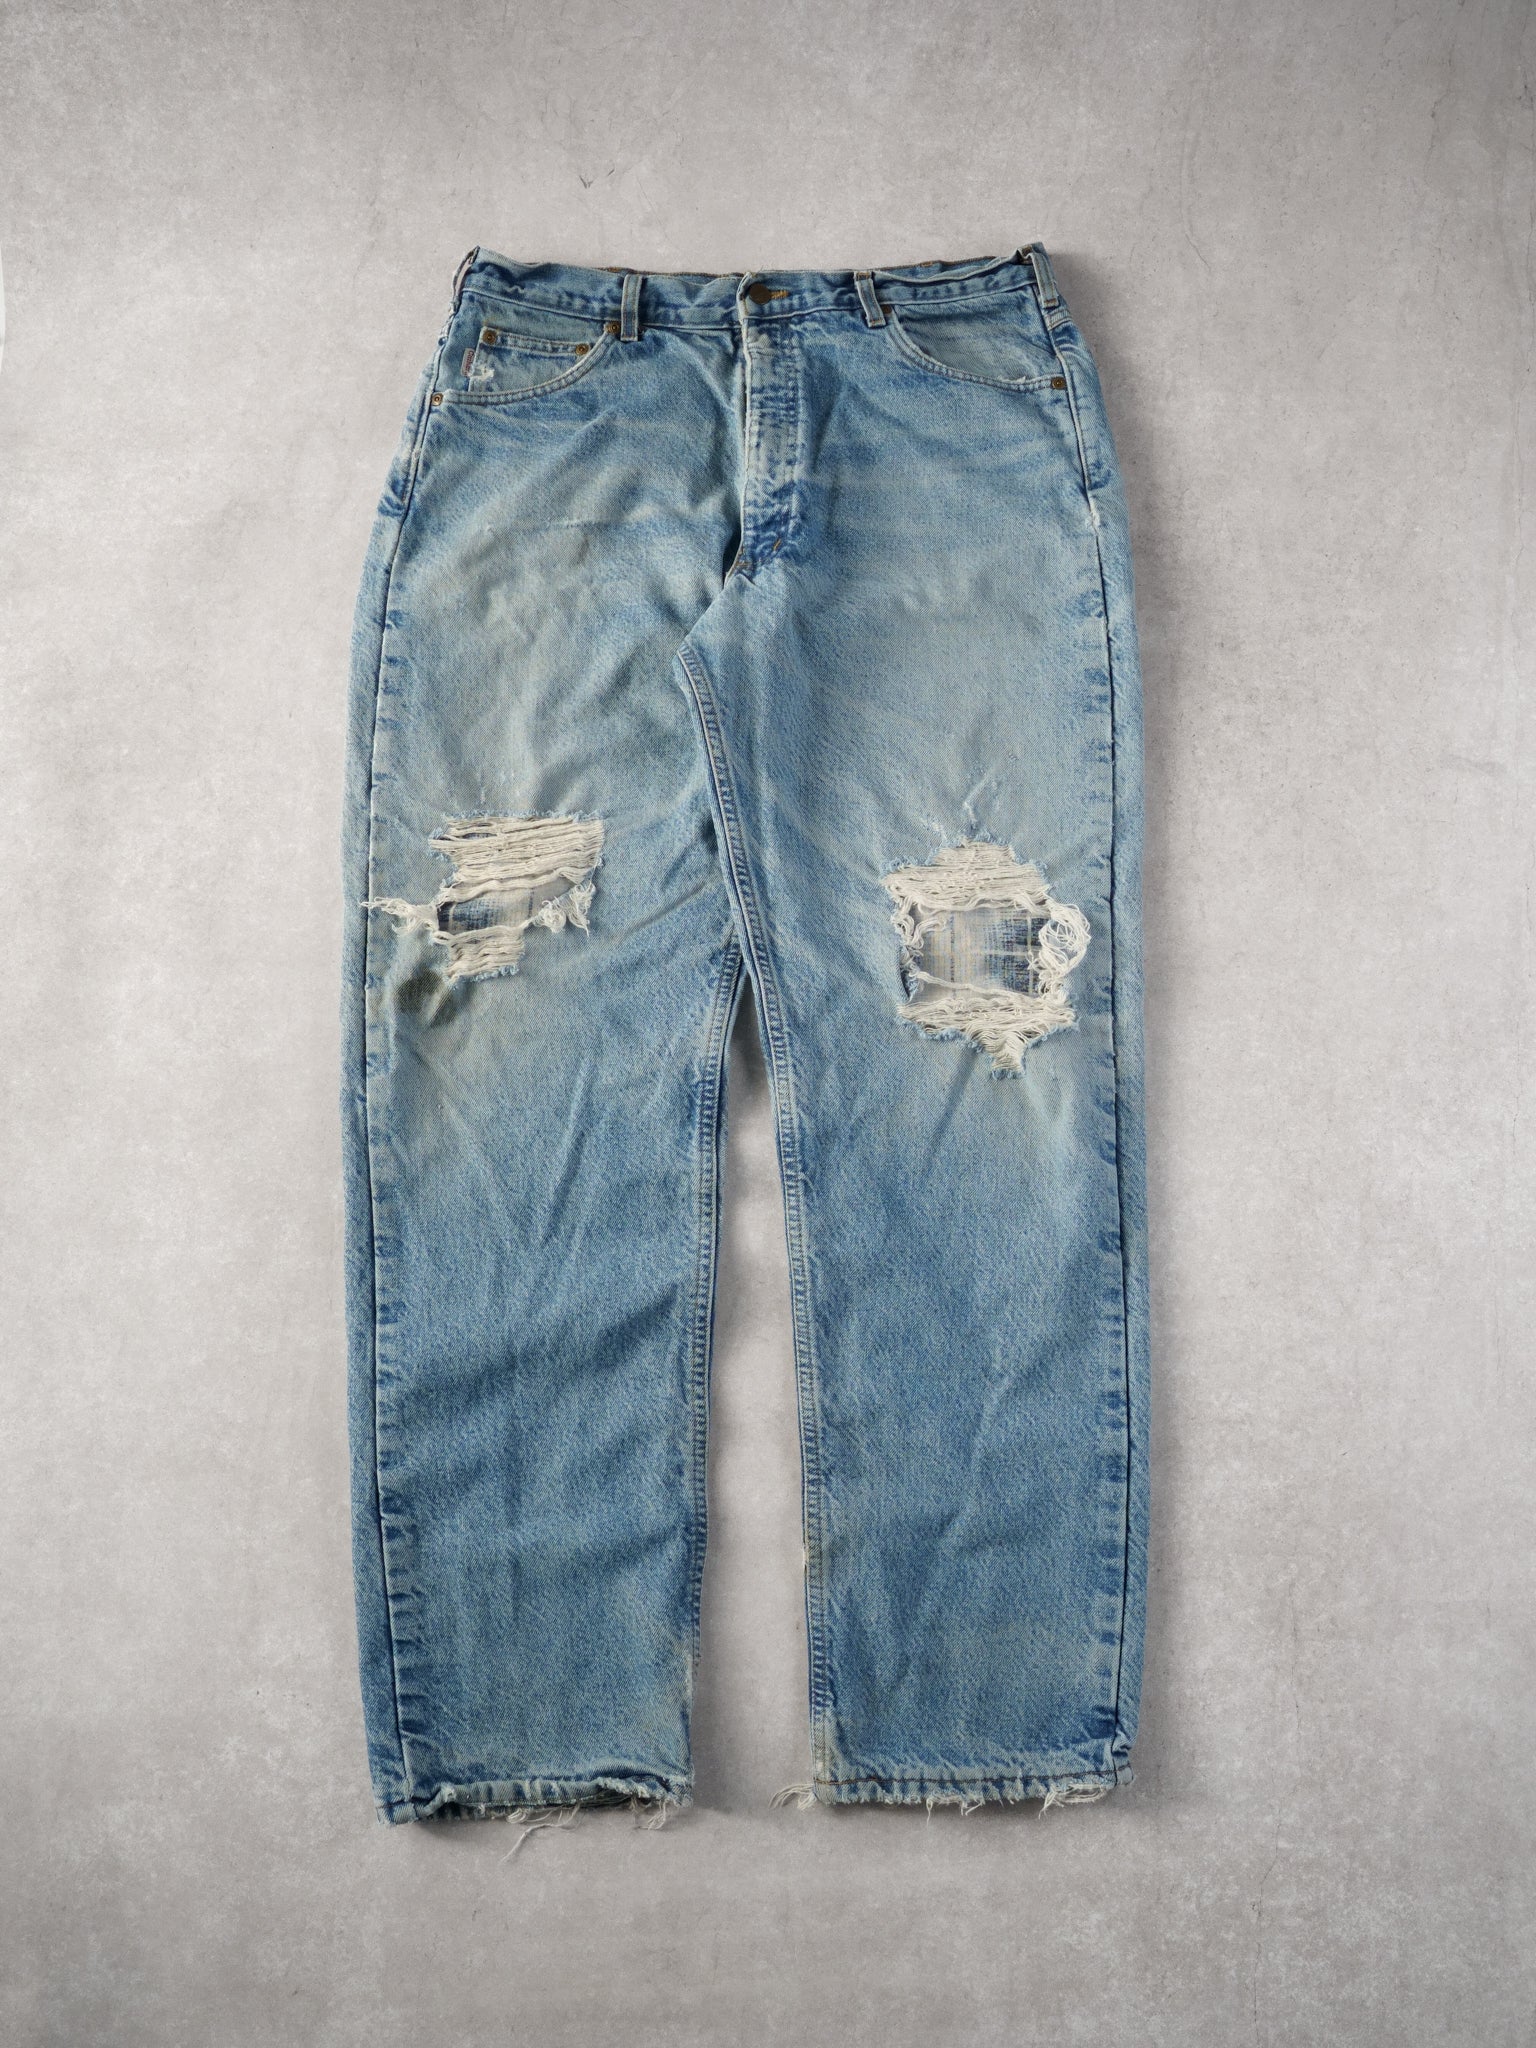 Vintage 90s Light Blue Carhartt Distressed Lined Denim Jeans (38x34)